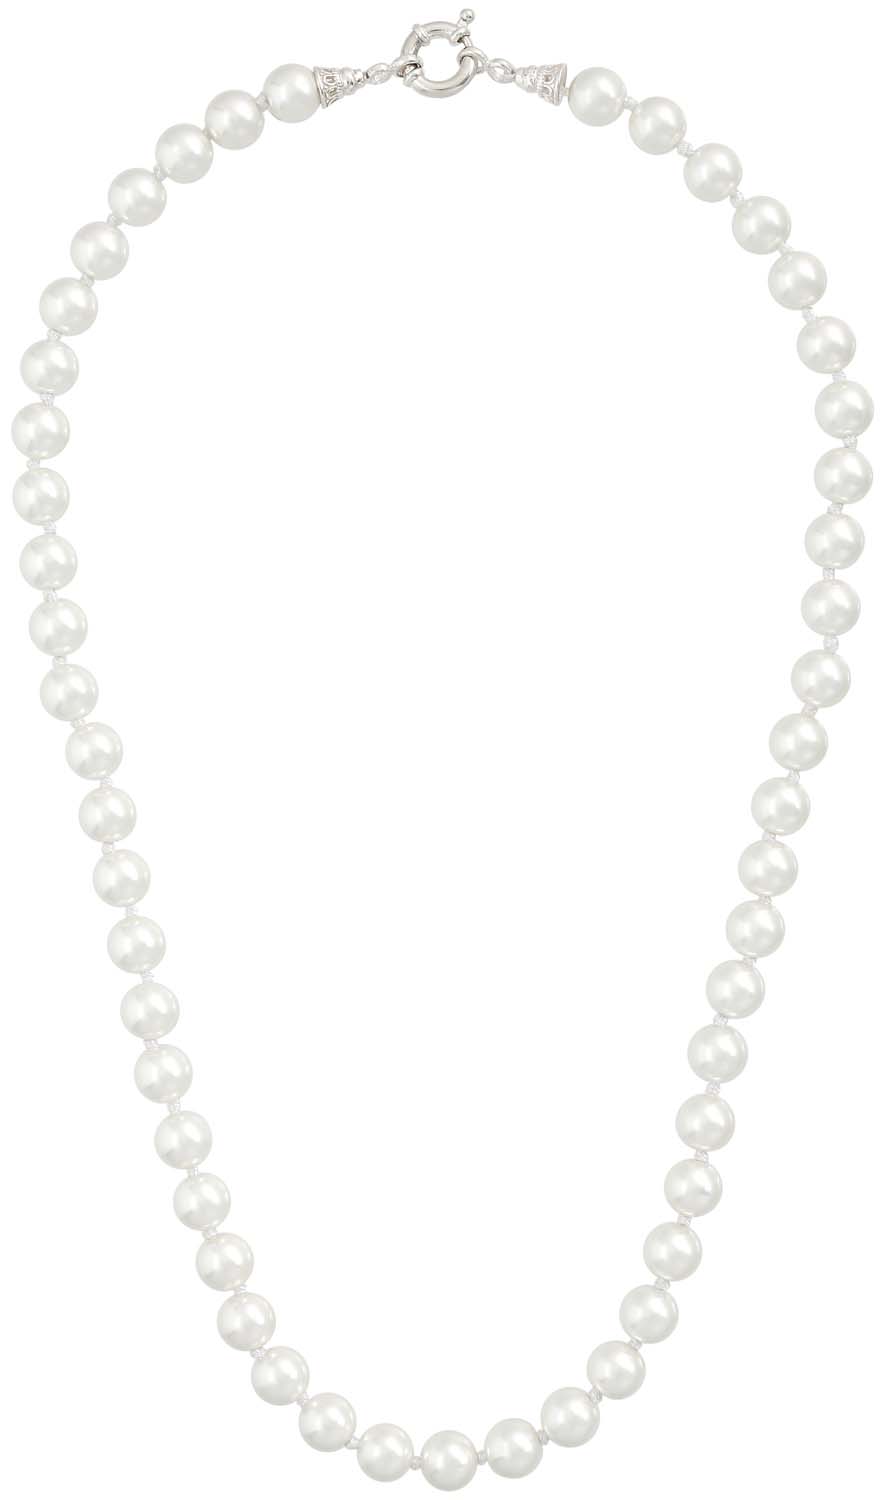 Collar - White Pearl